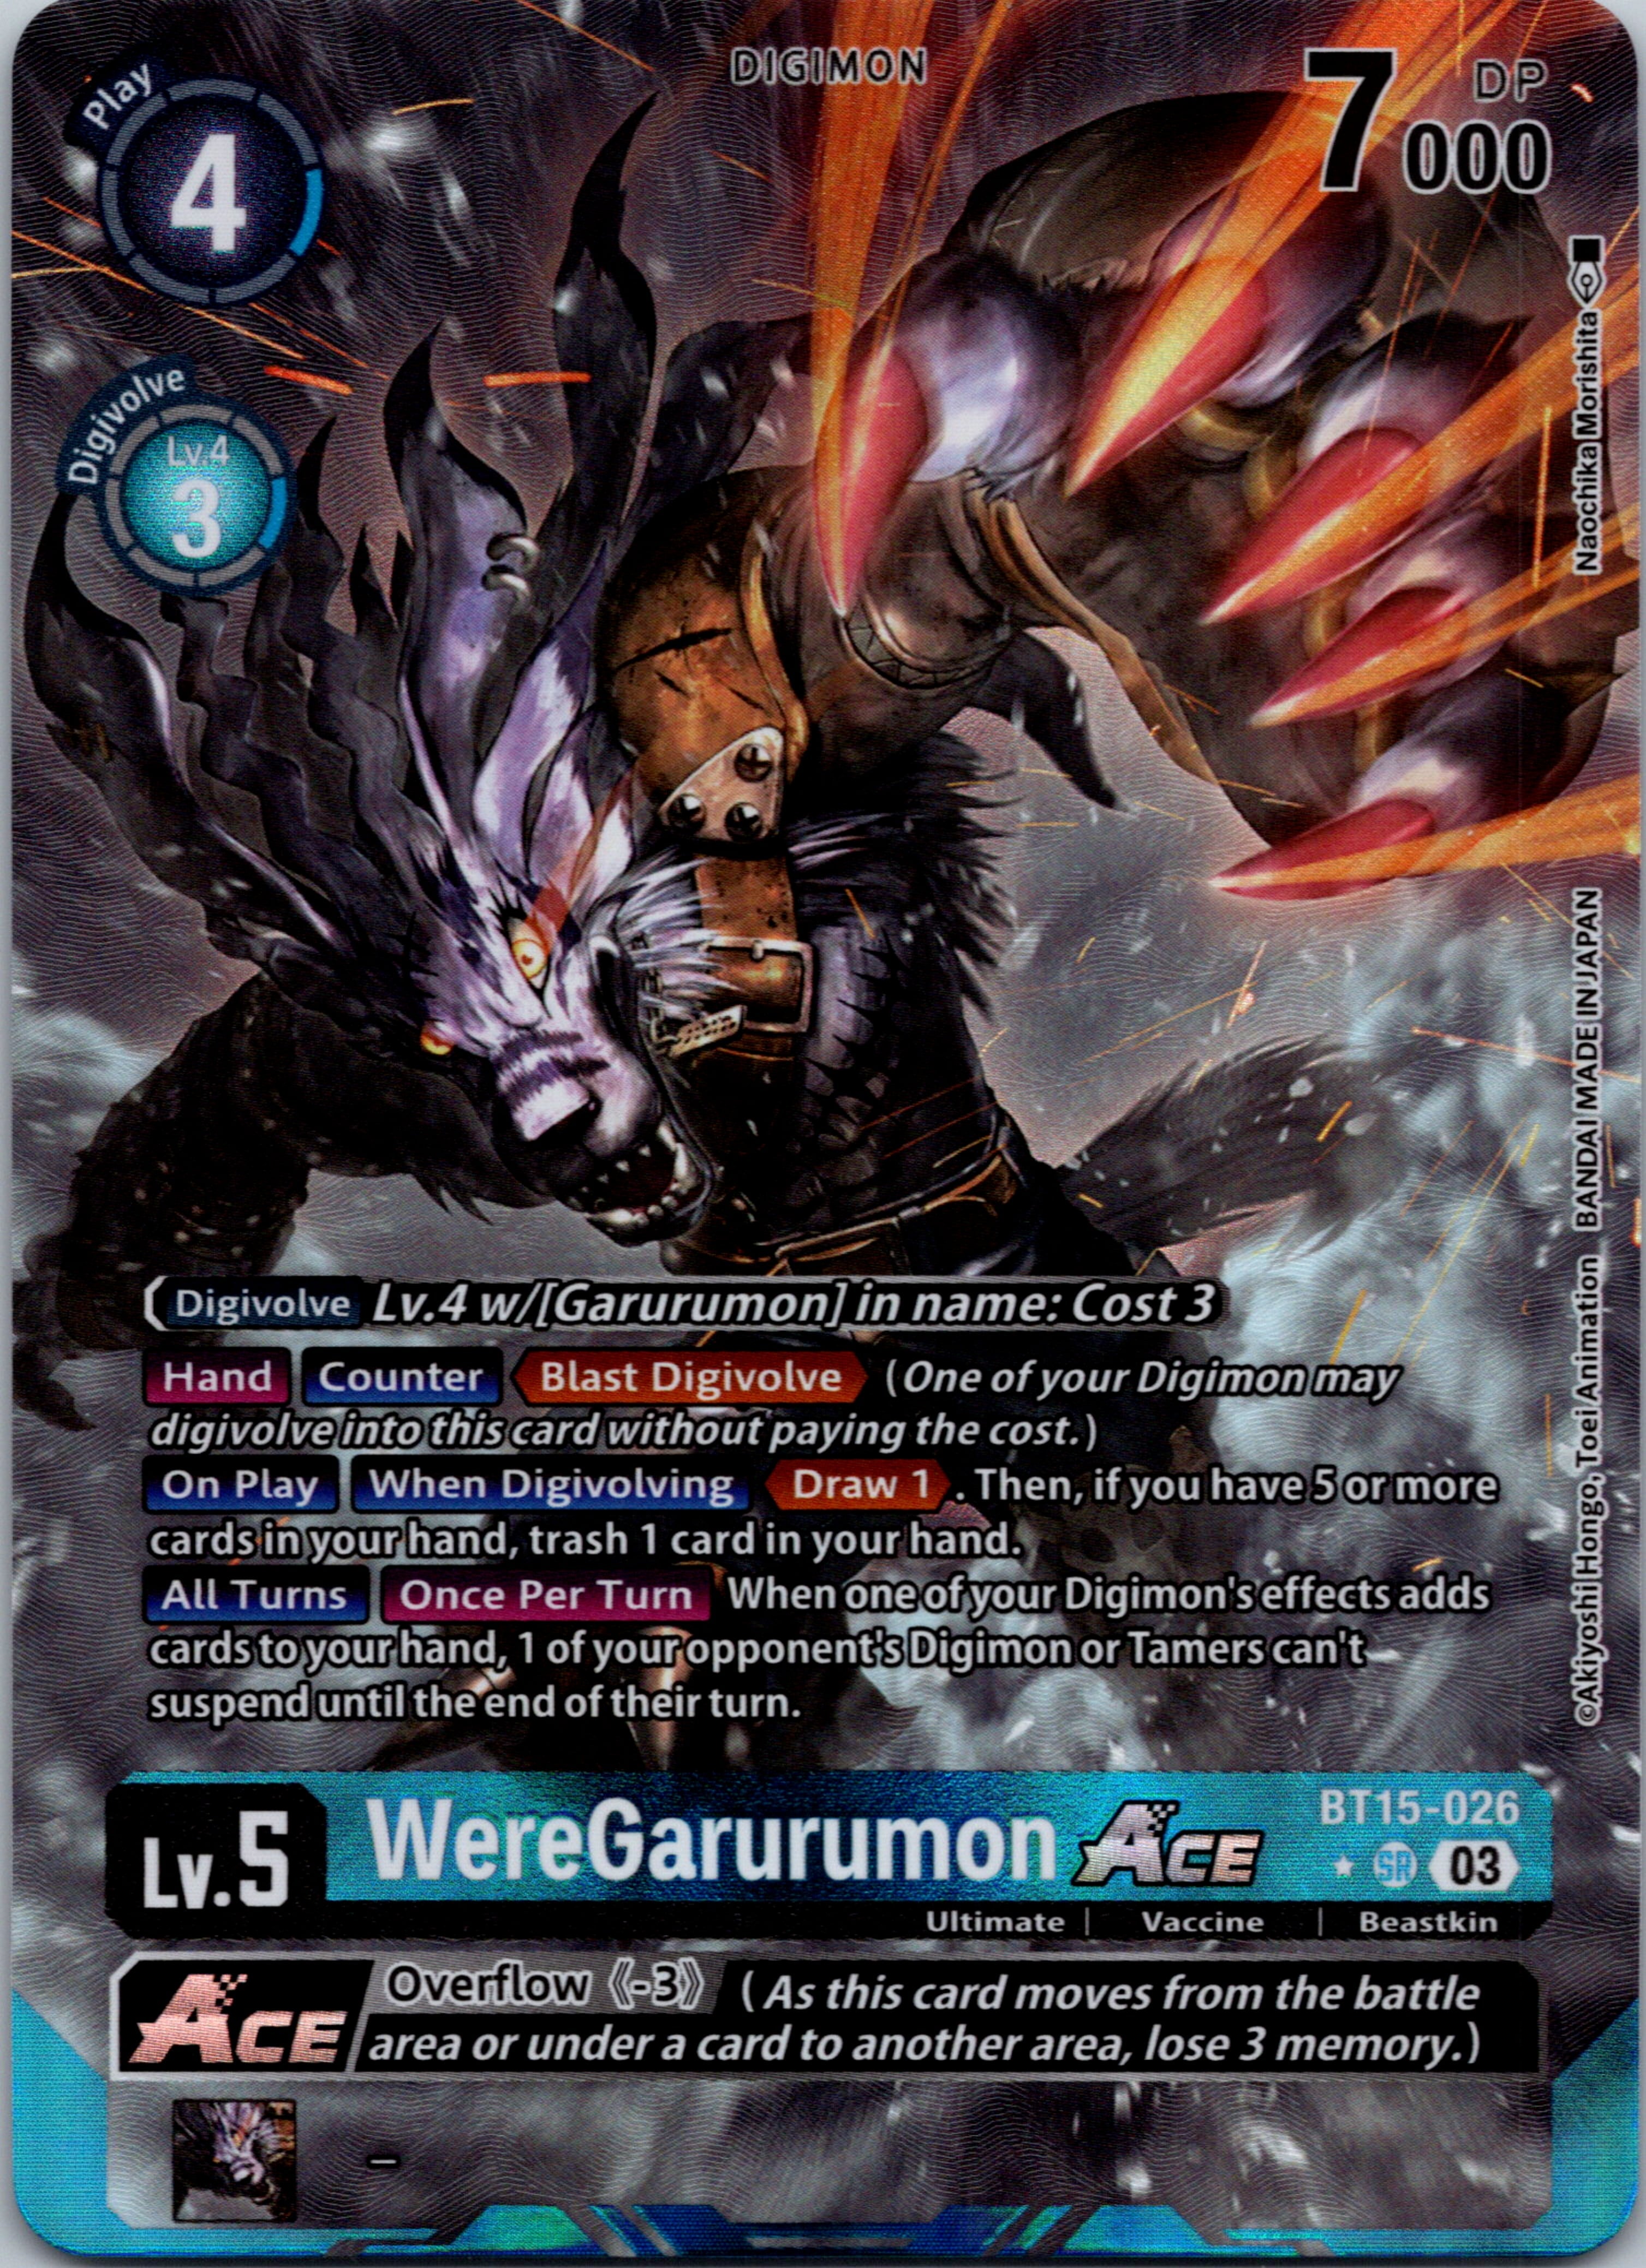 WereGarurumon Ace (Alternate Art) [BT15-026] [Exceed Apocalypse] Foil